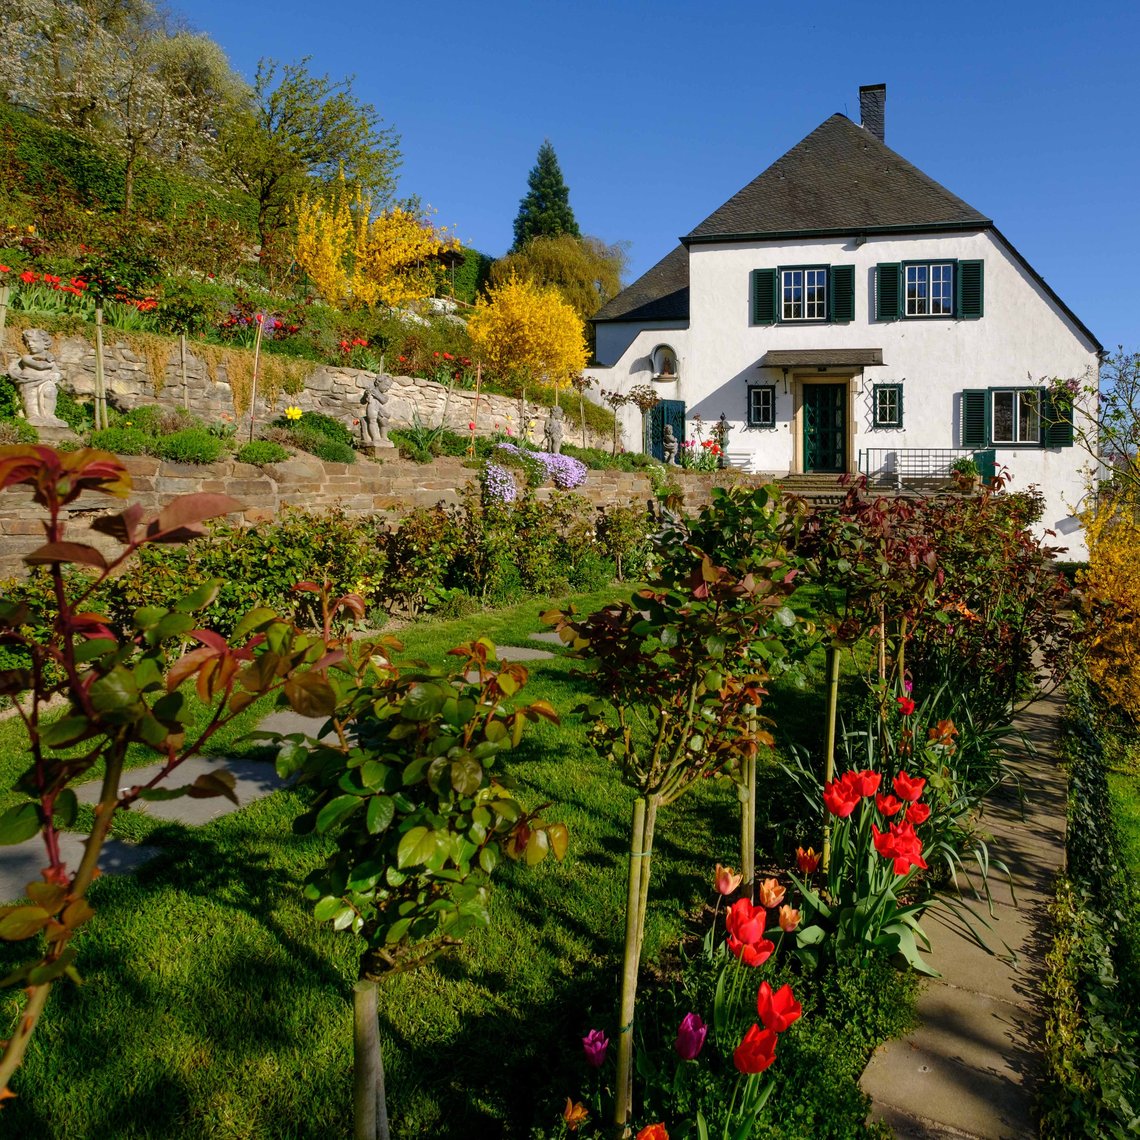 Adenauers  Haus mit Garten davor